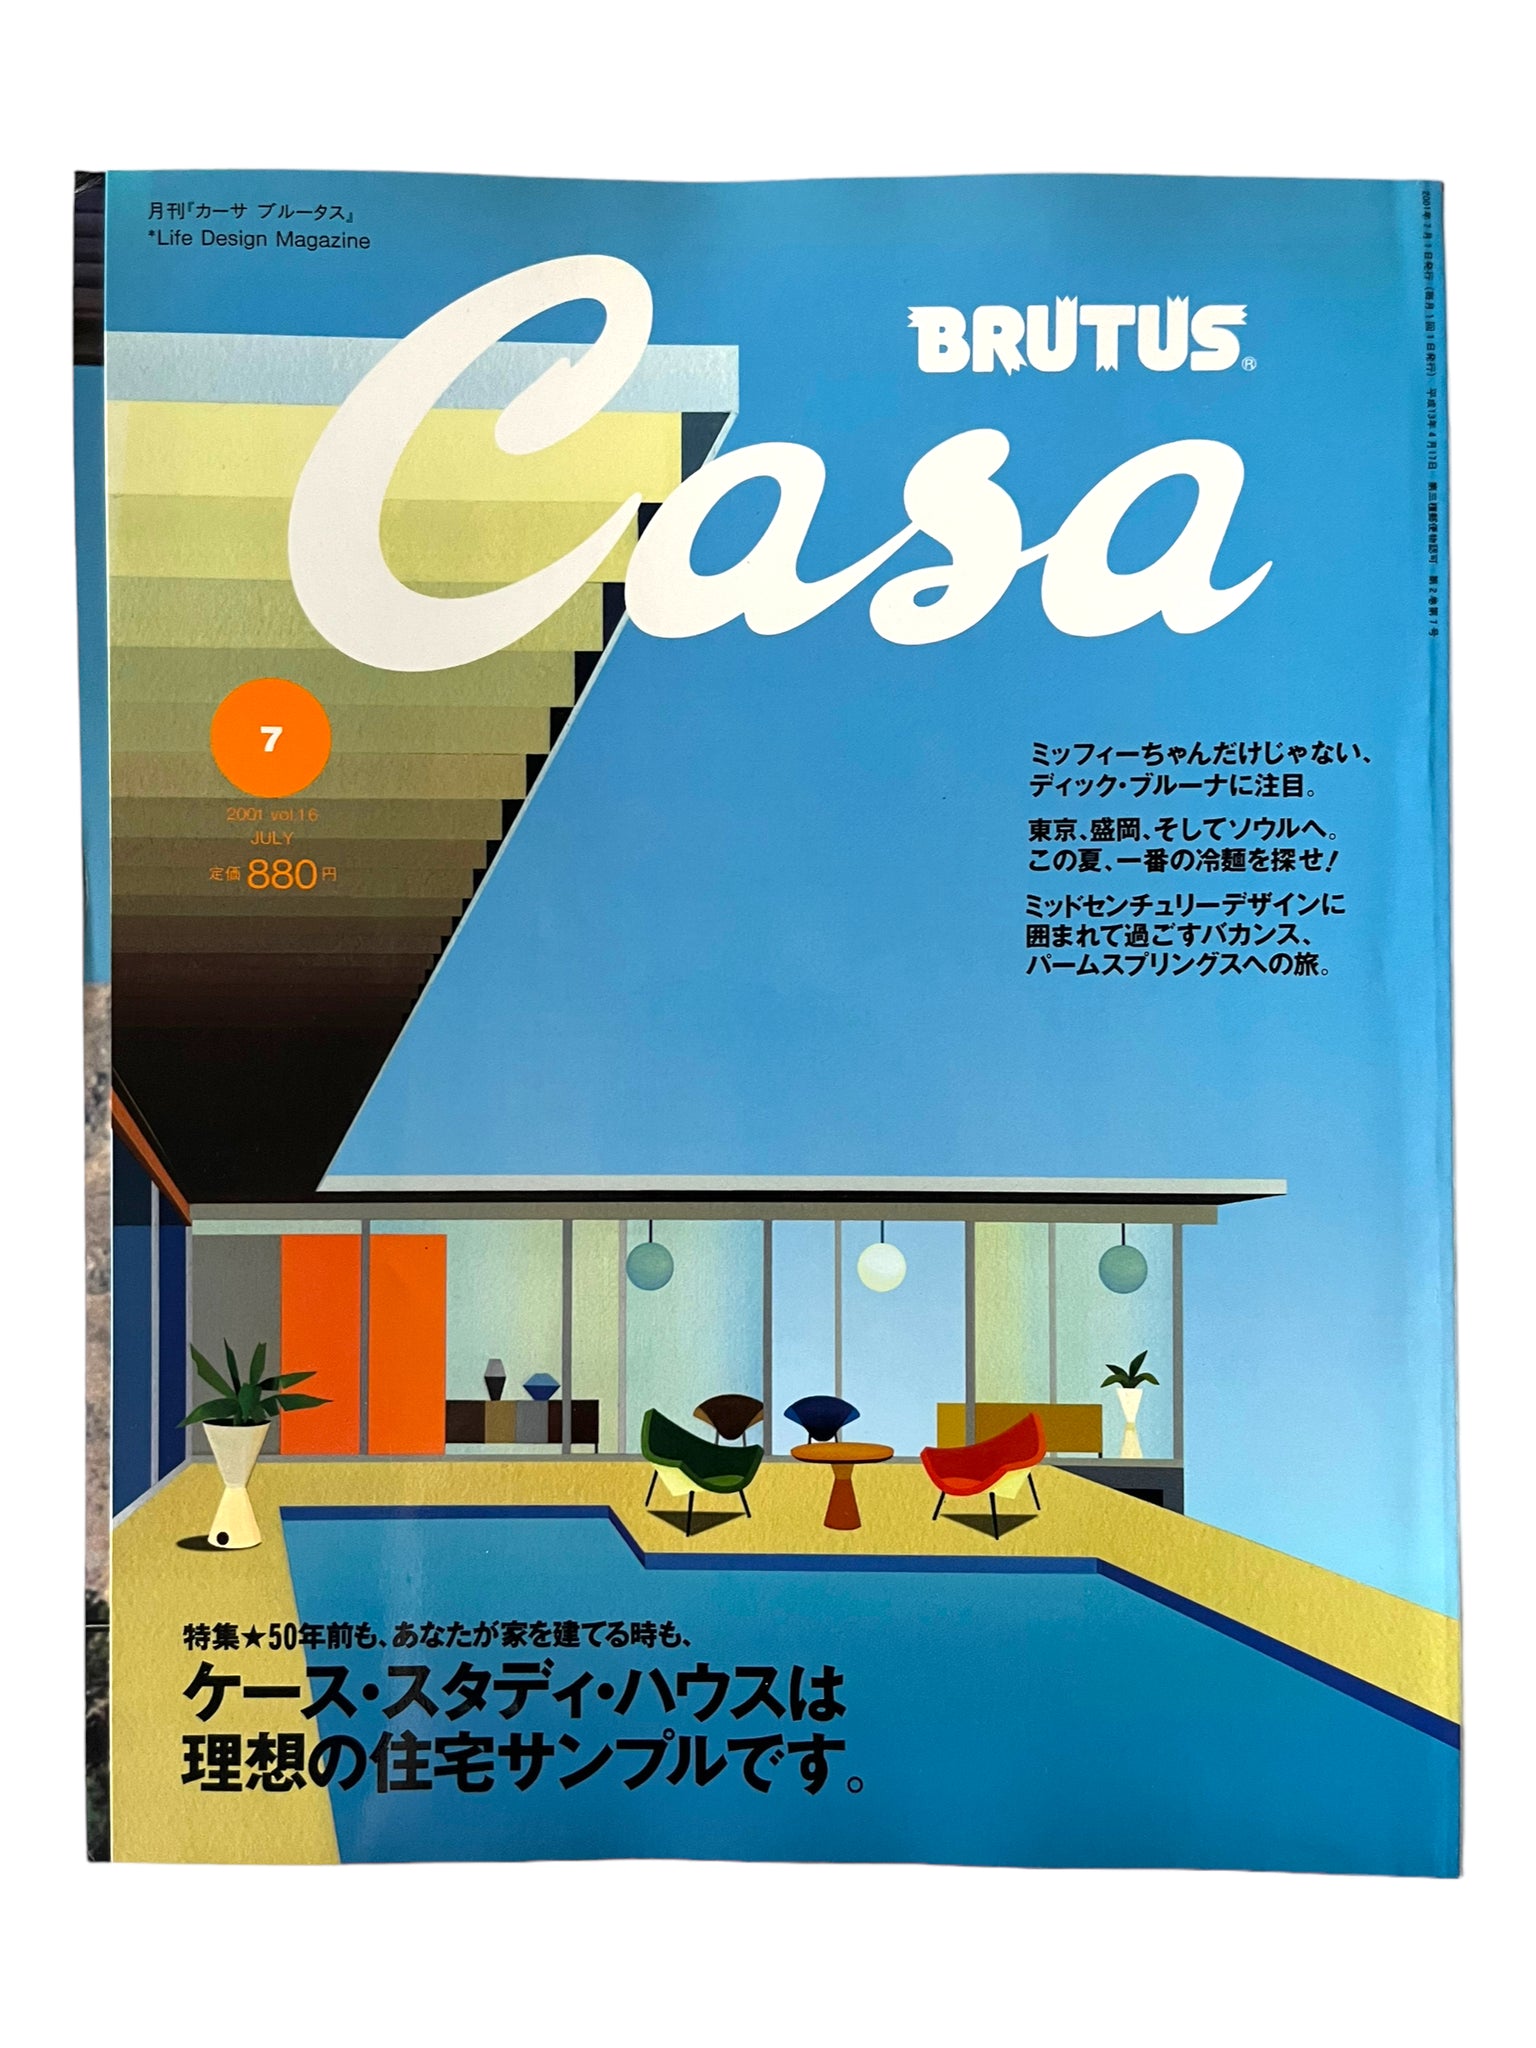 Casa Brutus 16